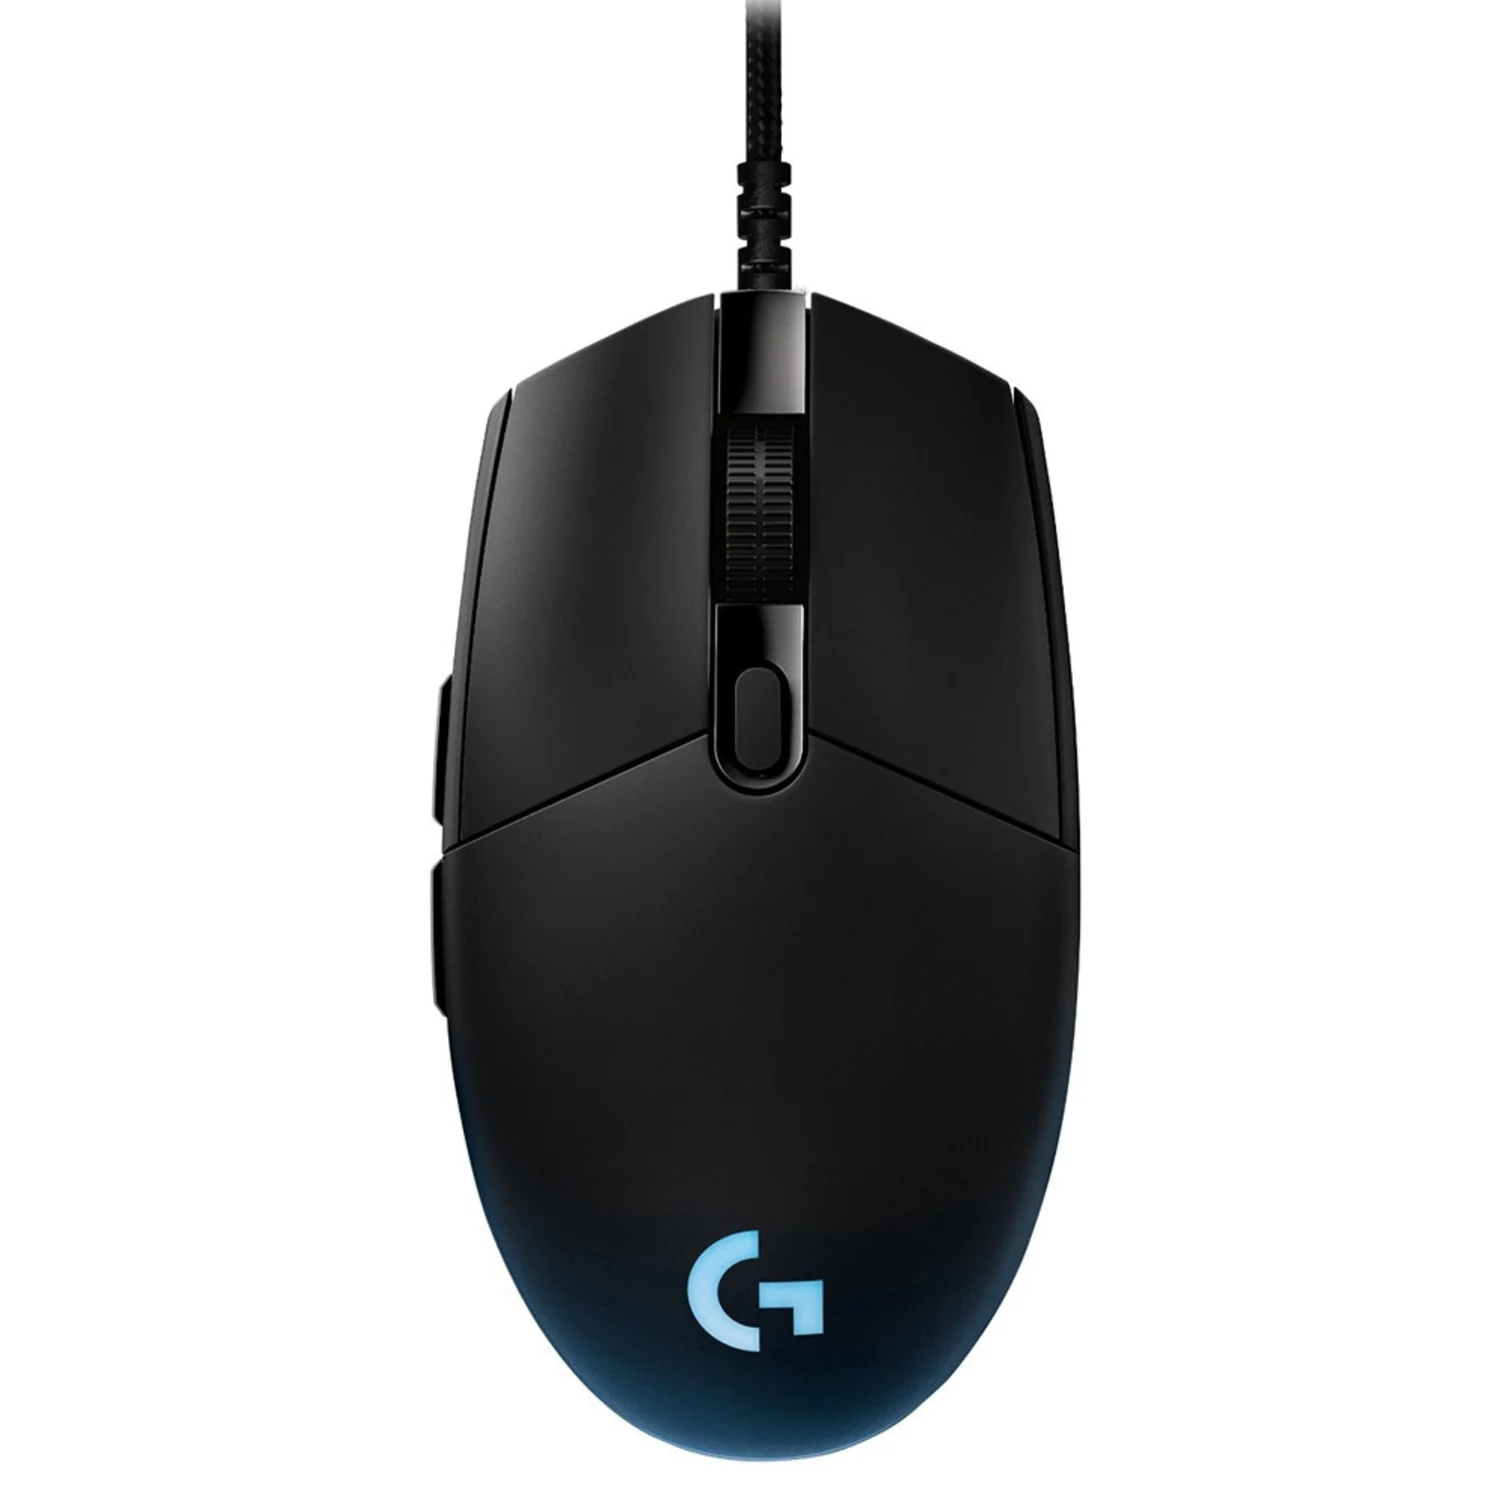 Mouse Gamer Logitech G Pro Gaming - Preto (910-005536)